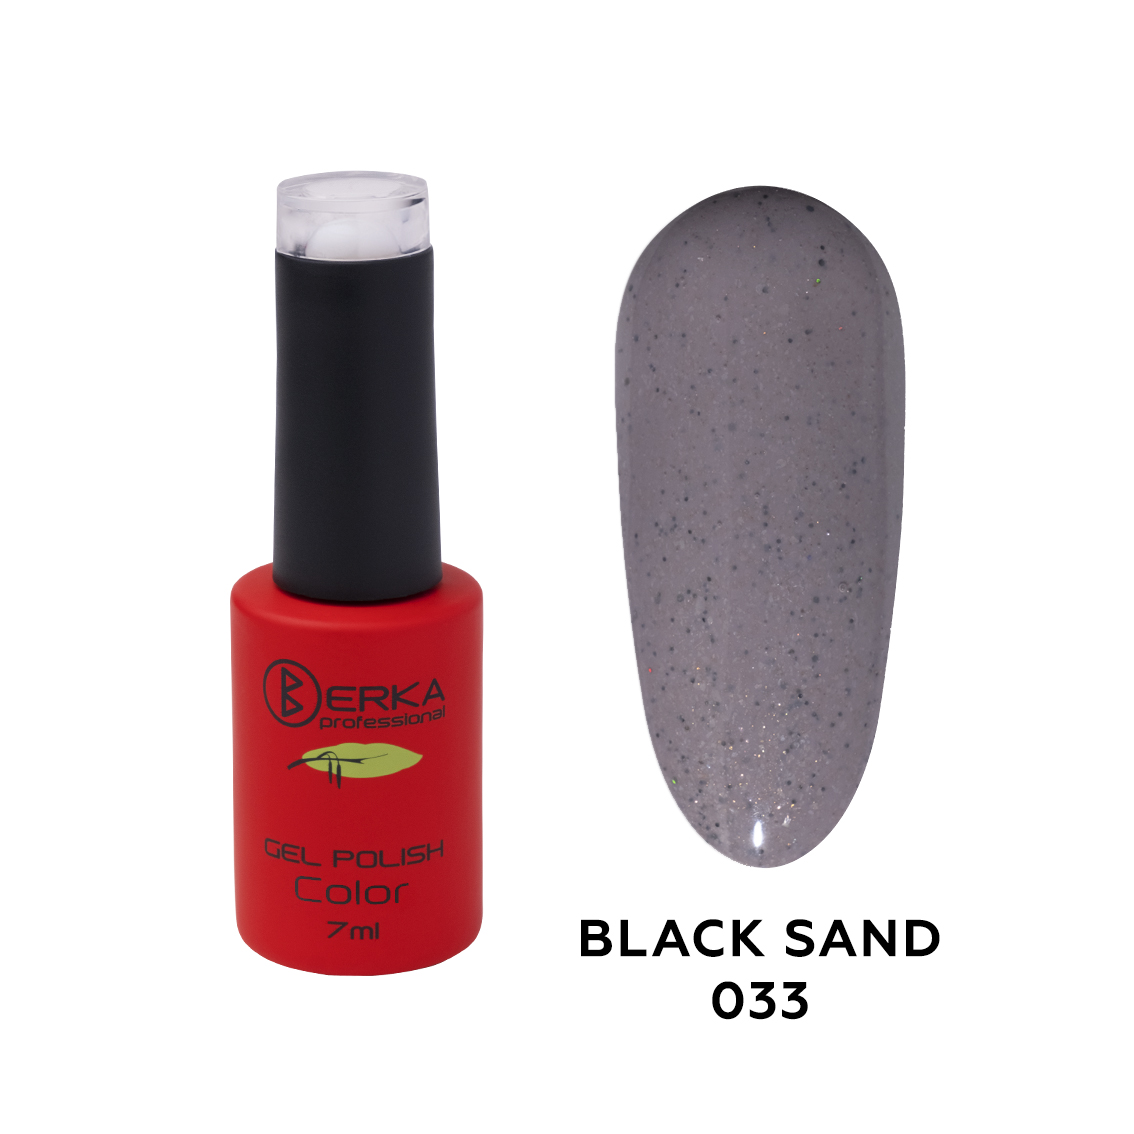 Гель-лак Black Sand №033 7мл Berka